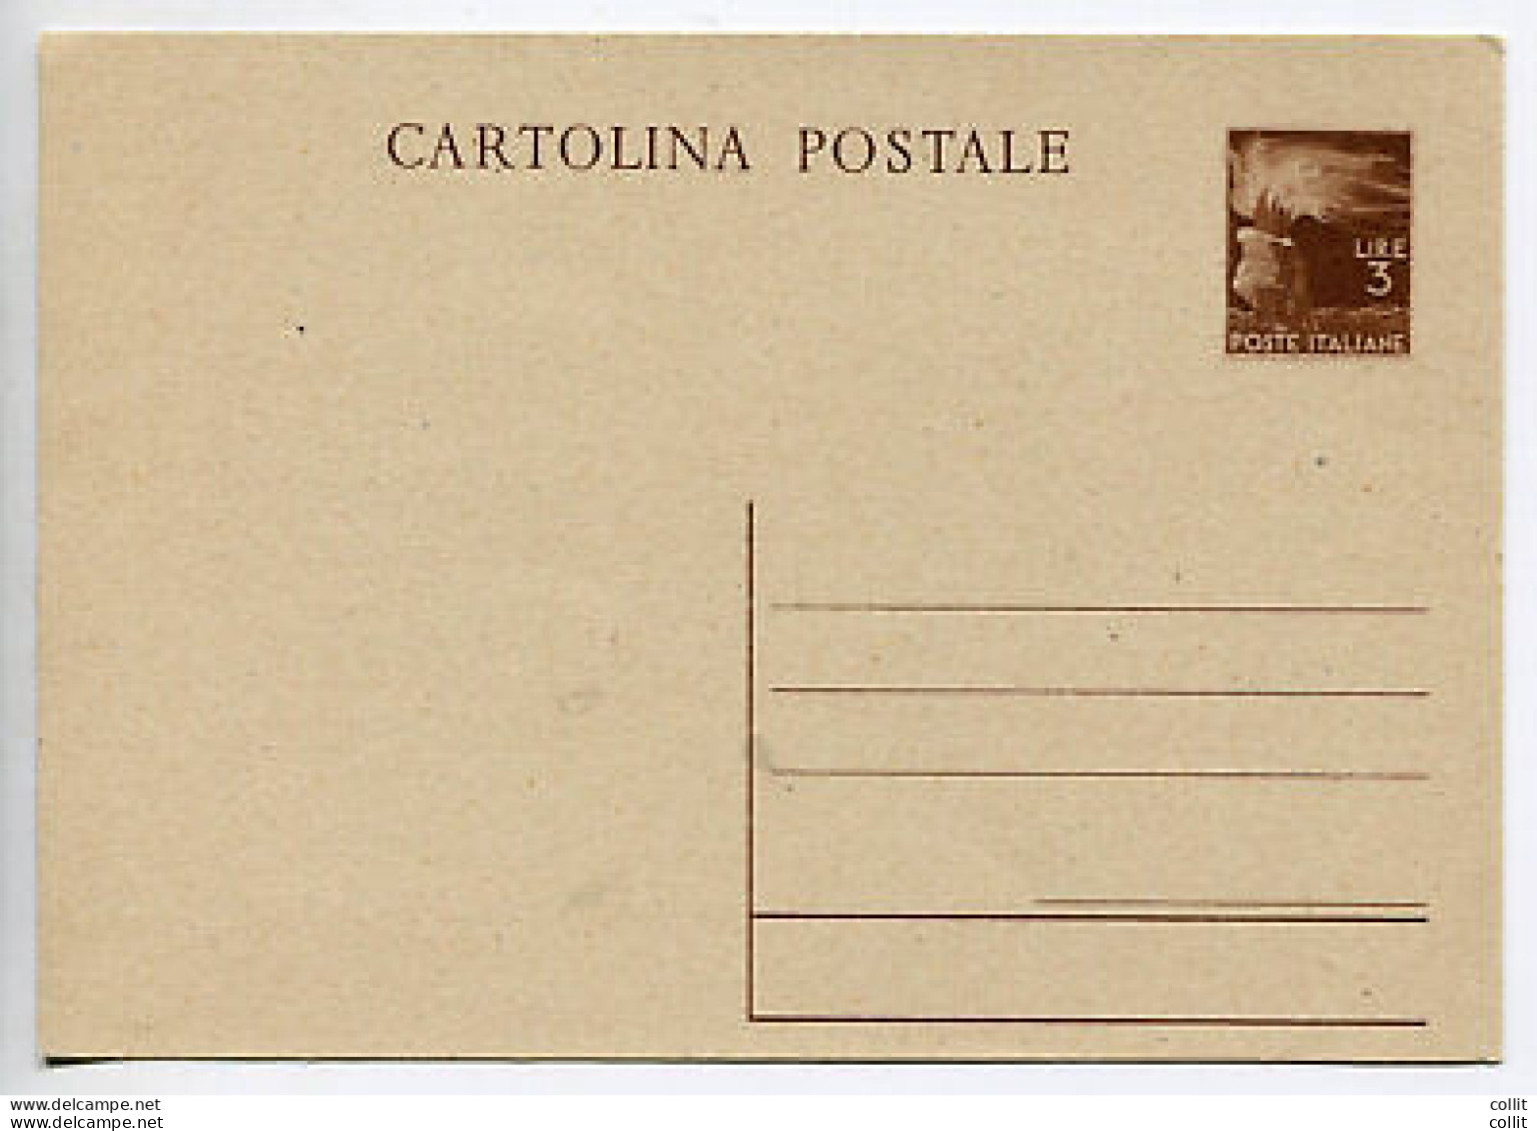 Cartolina Postale L. 3 Democratica - Entero Postal